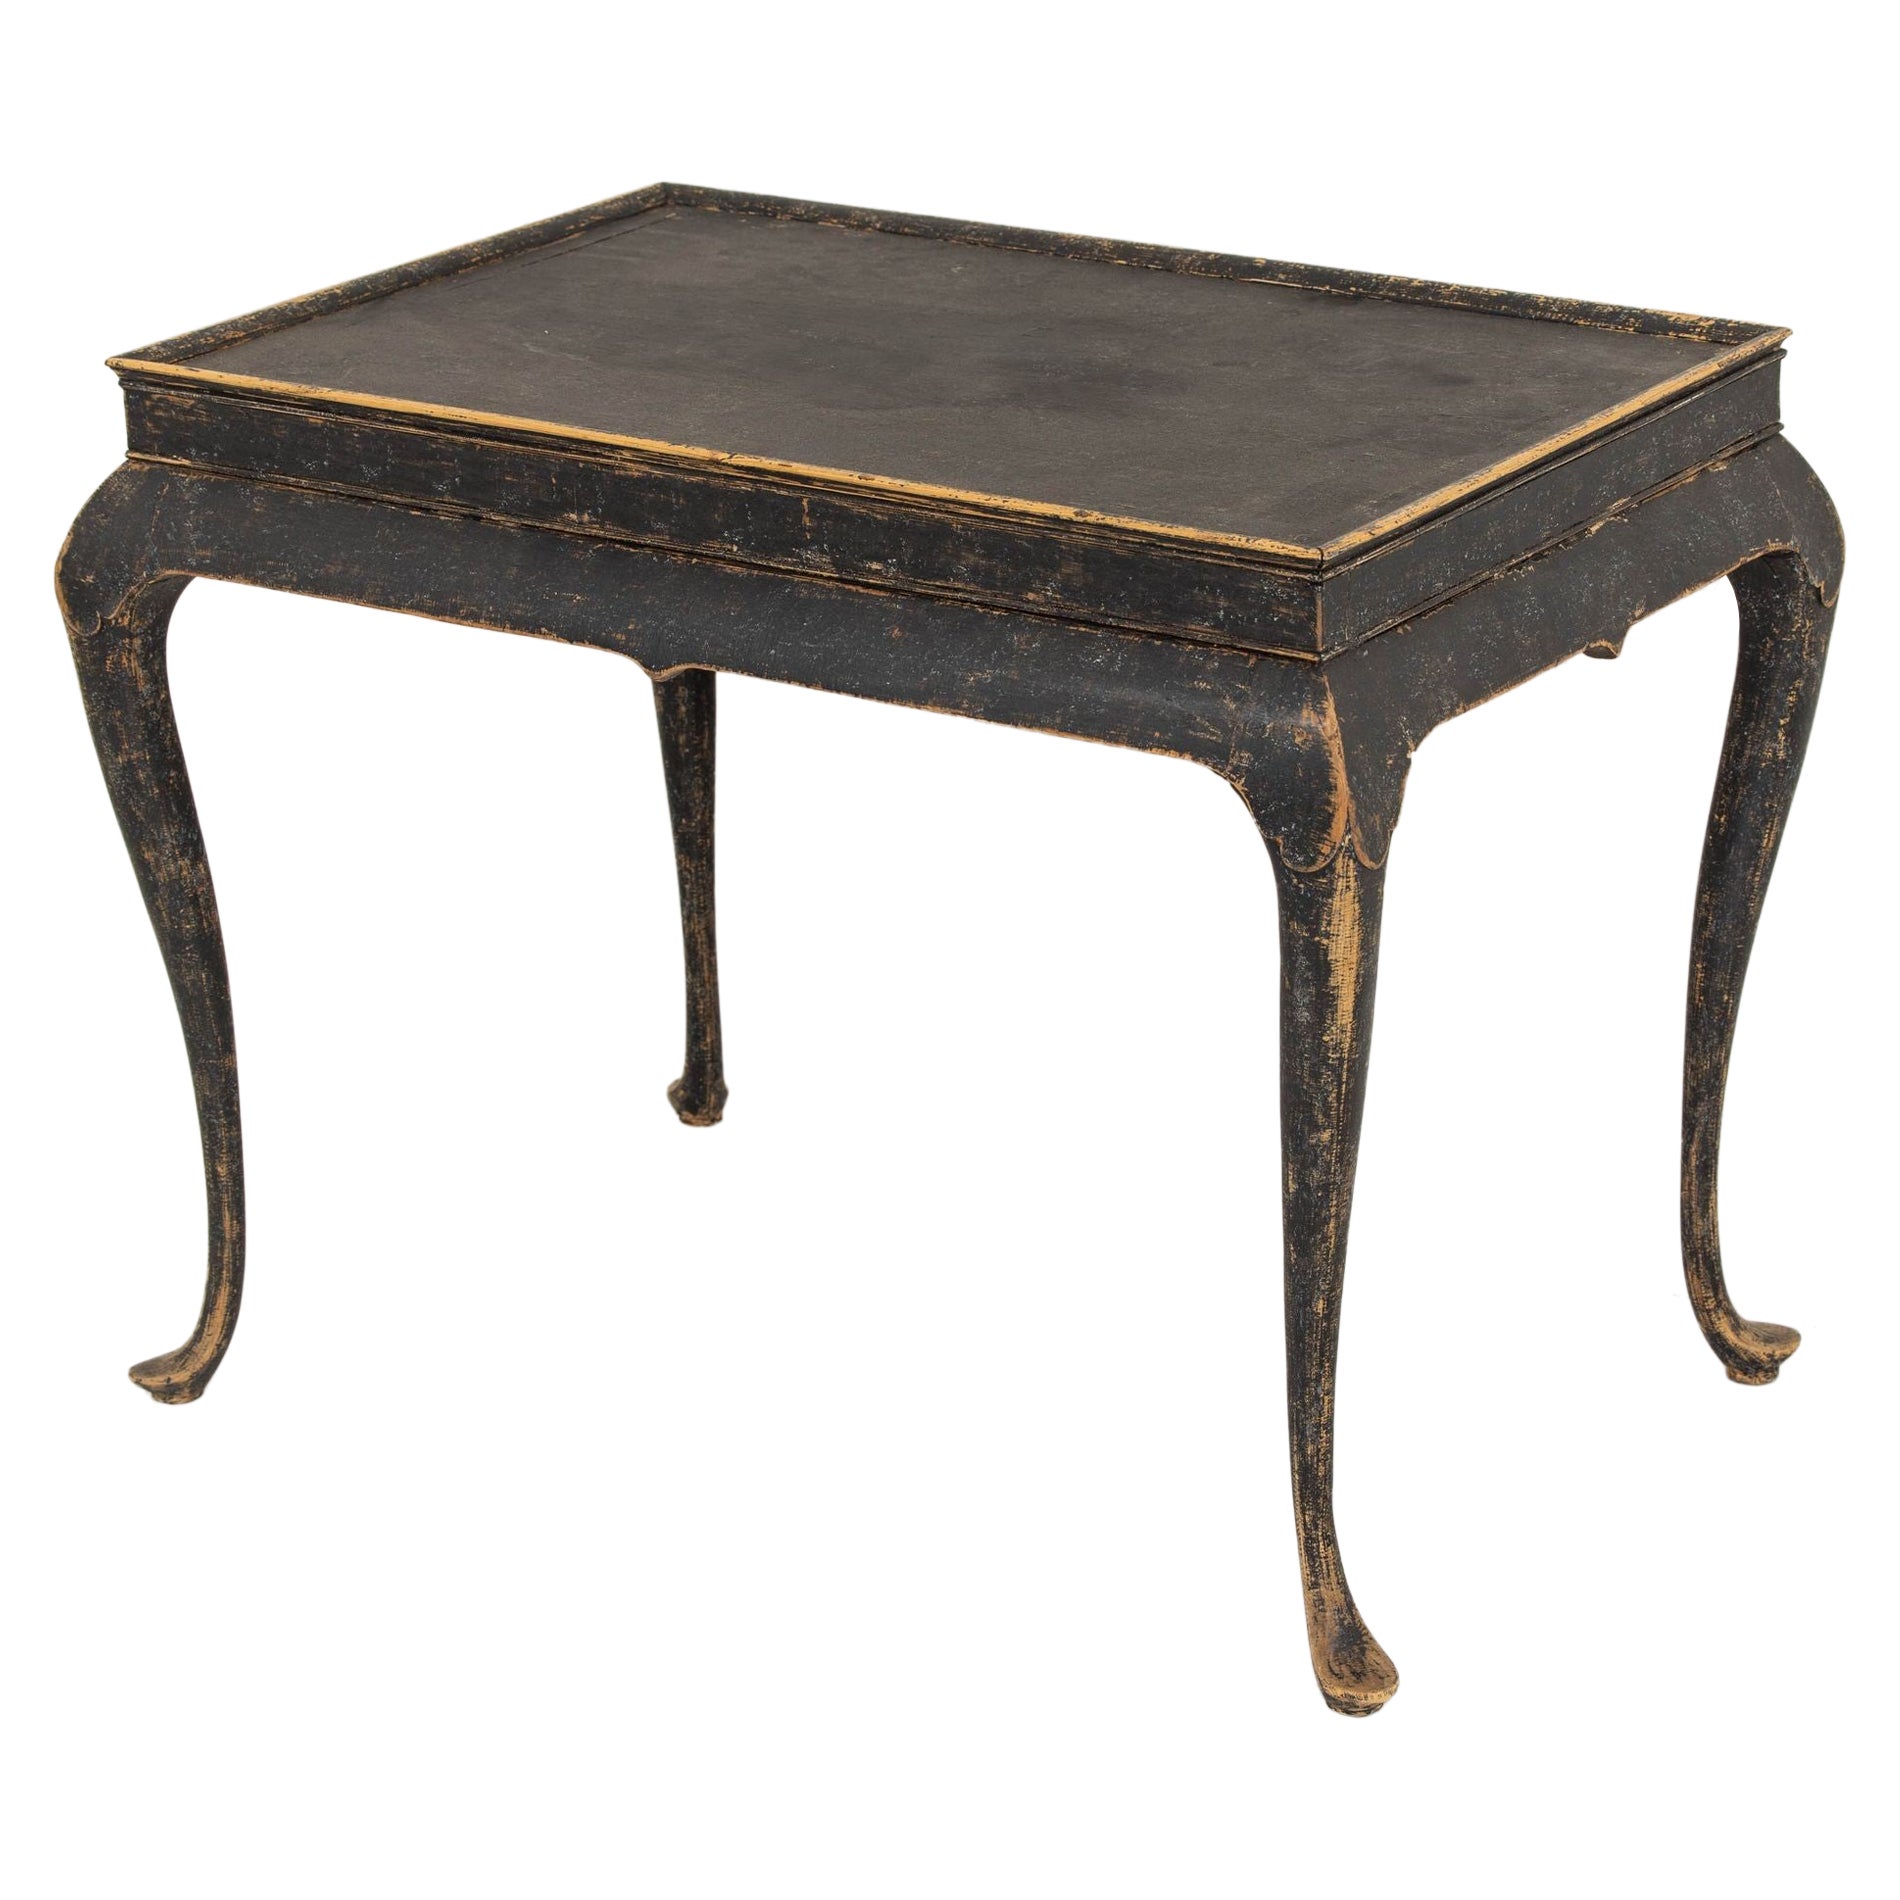 18th c. Swedish Rococo Period Painted Tea Table